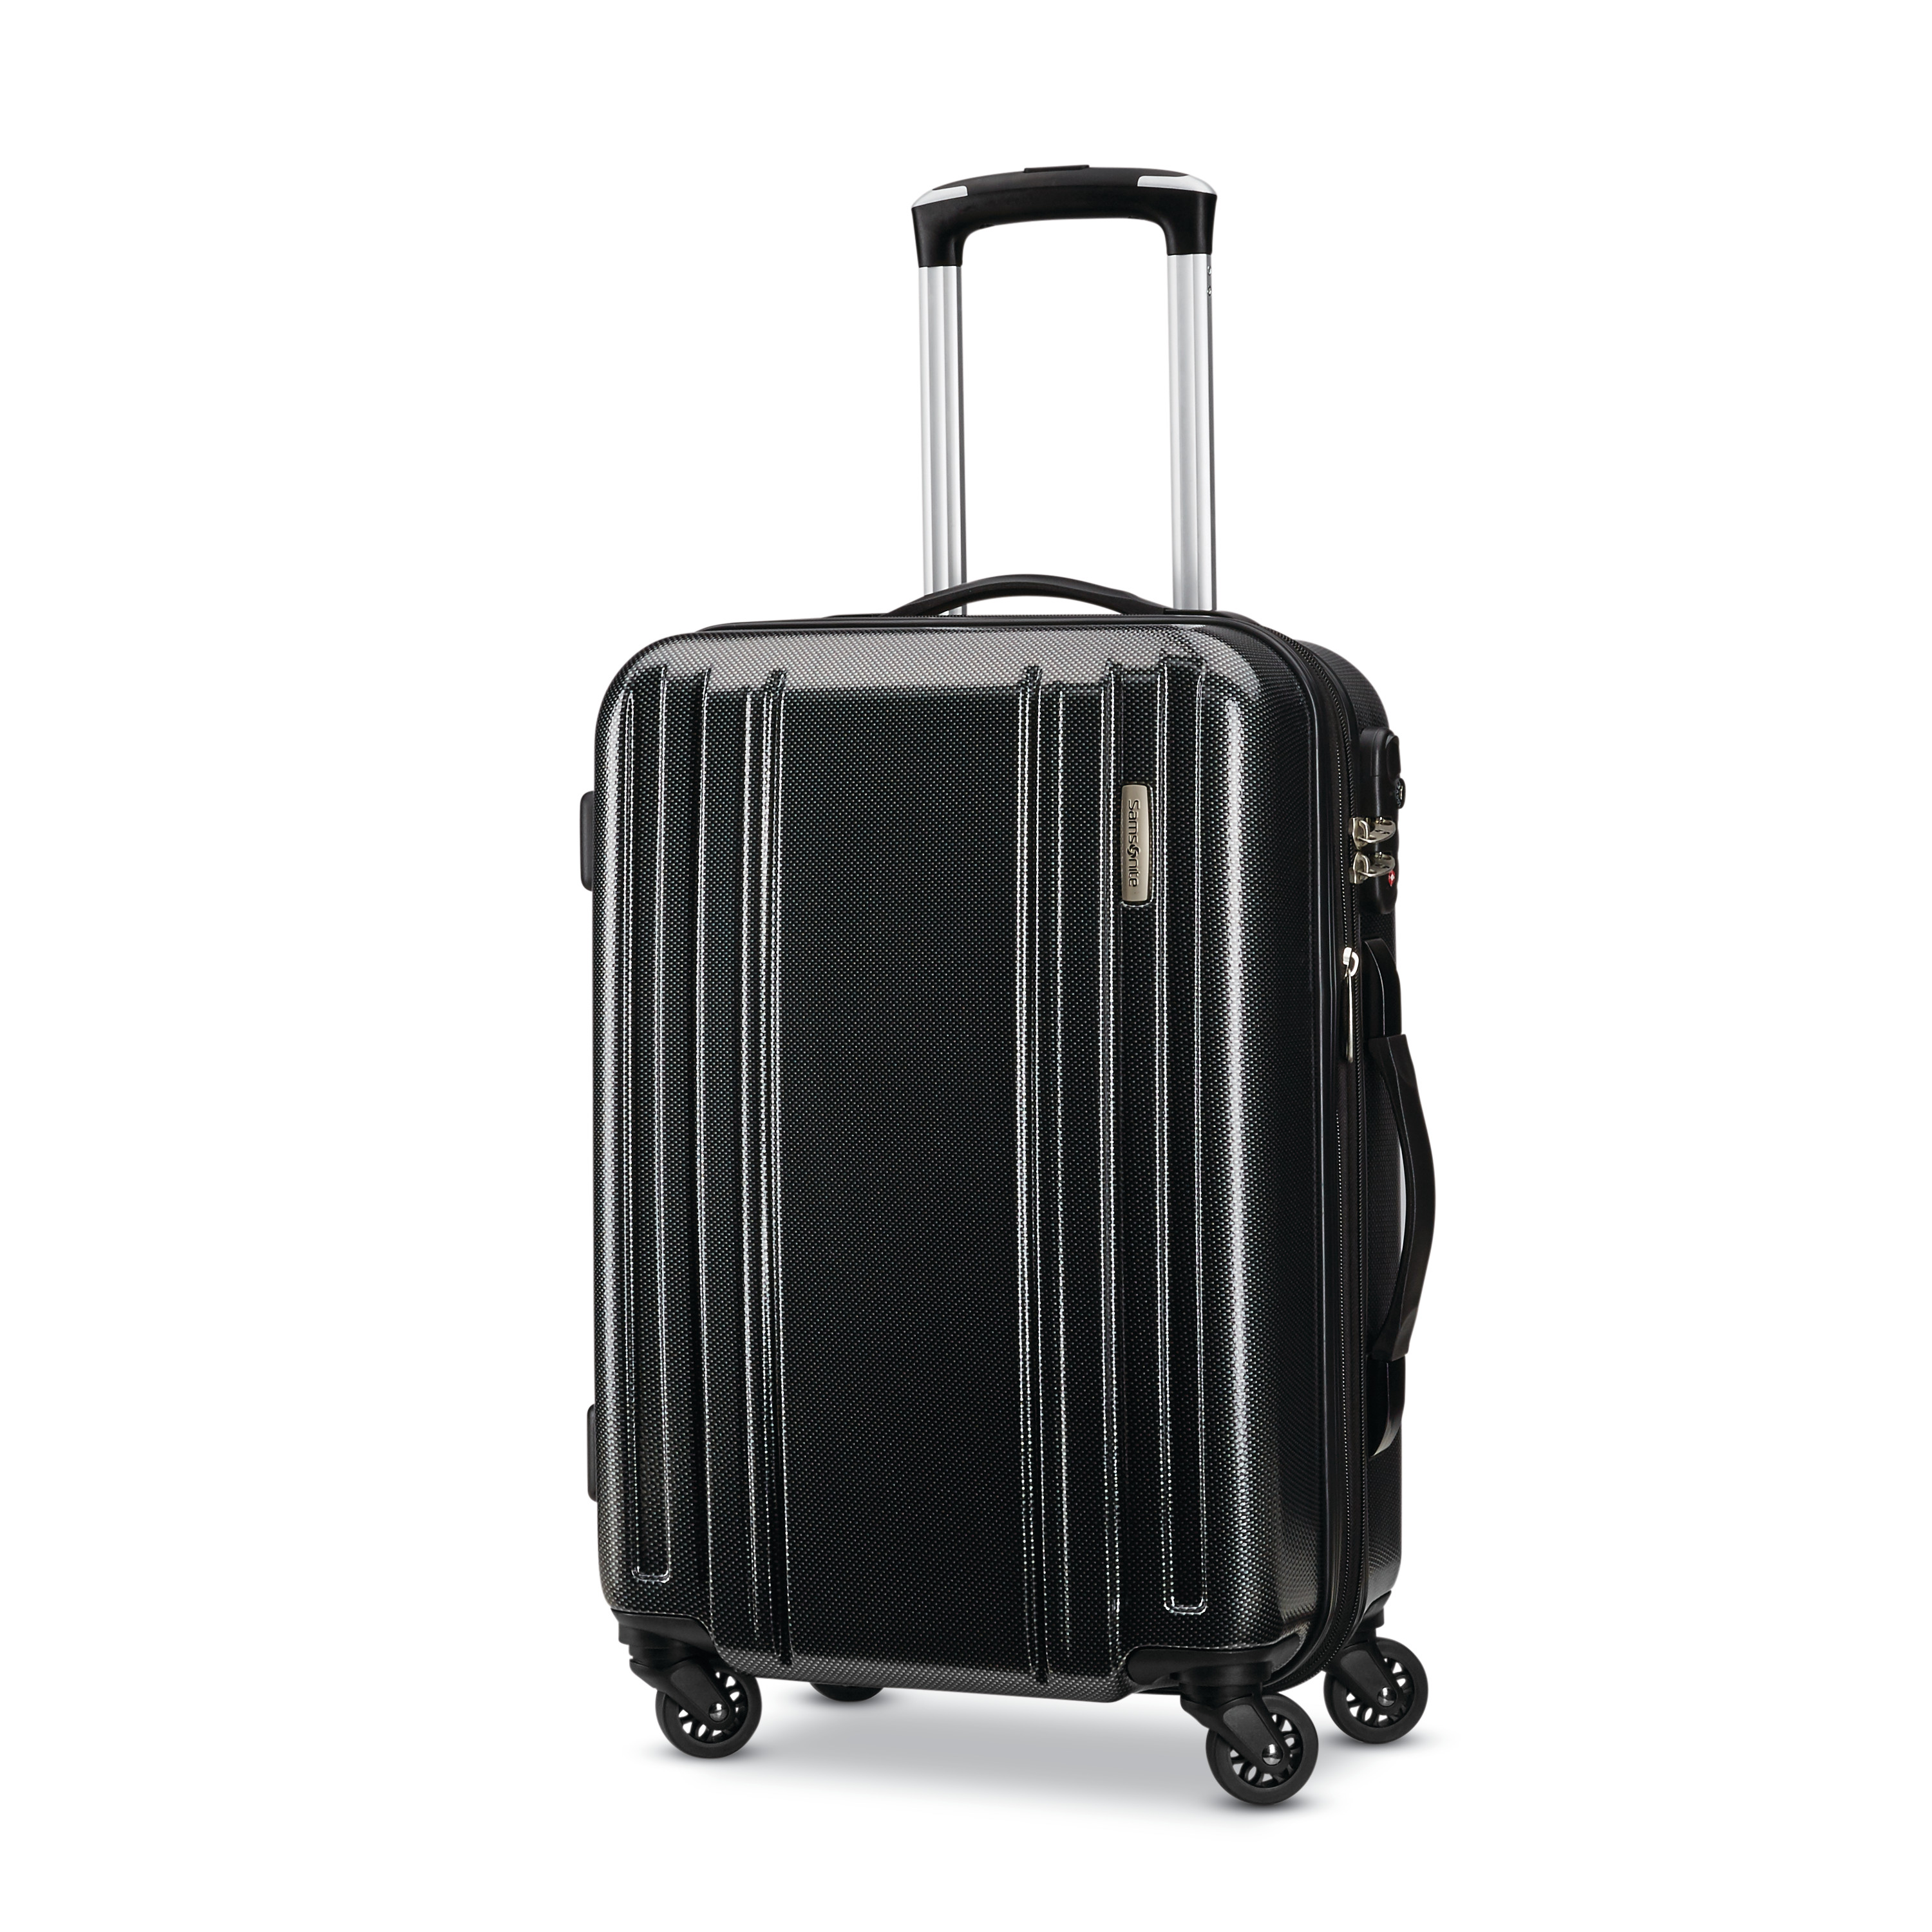 Samsonite Carbon 2 Carry-On Spinner - Travel Essential